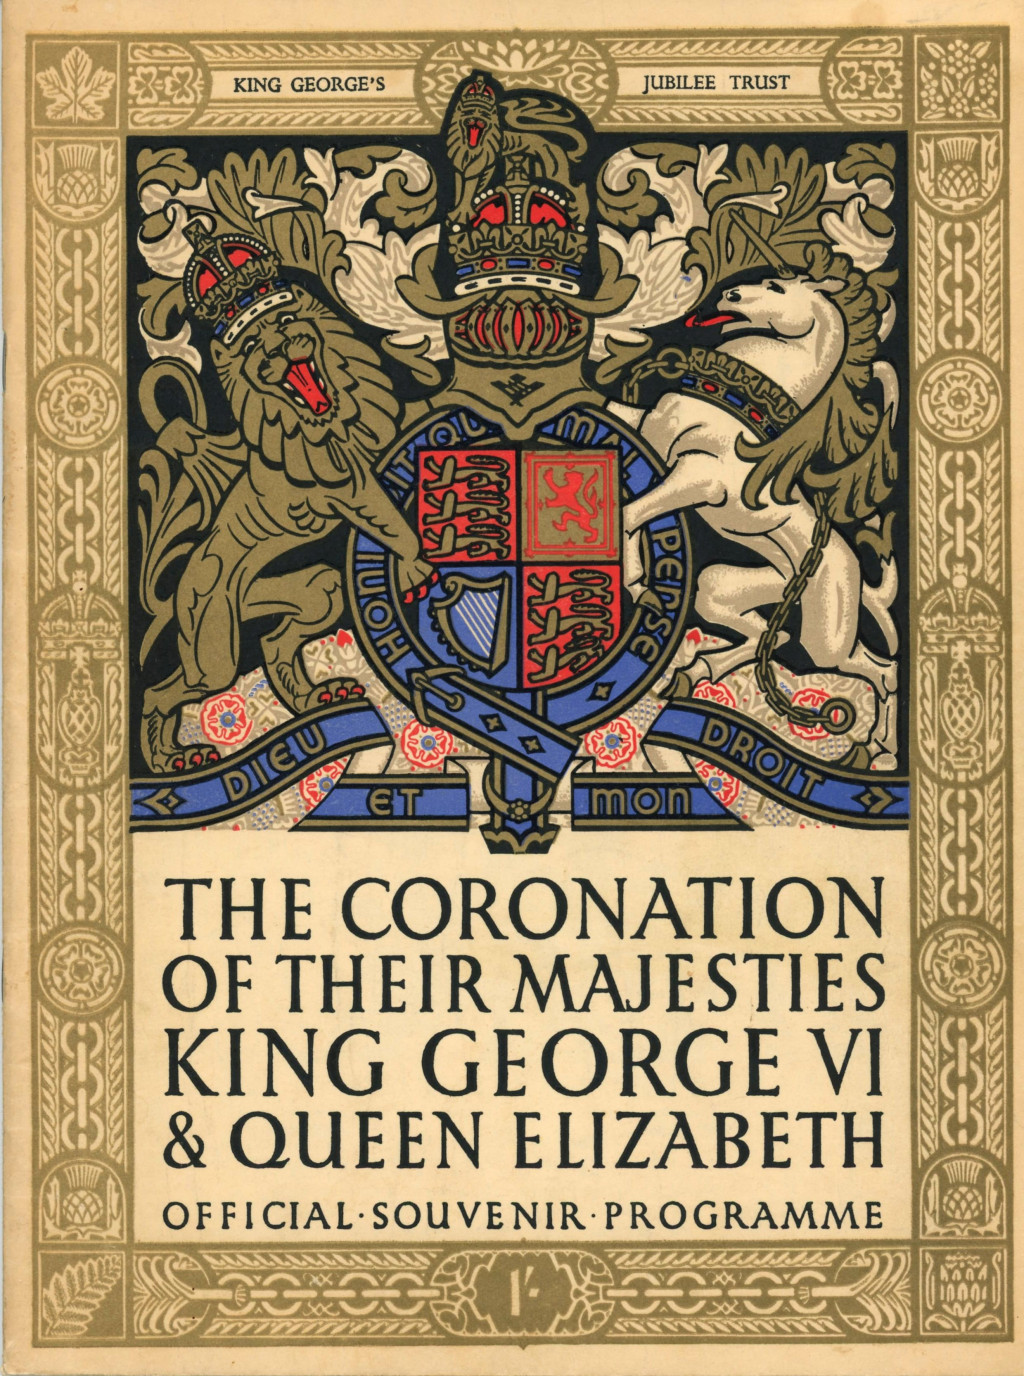 Coronation of George VI and Elizabeth - Wikipedia